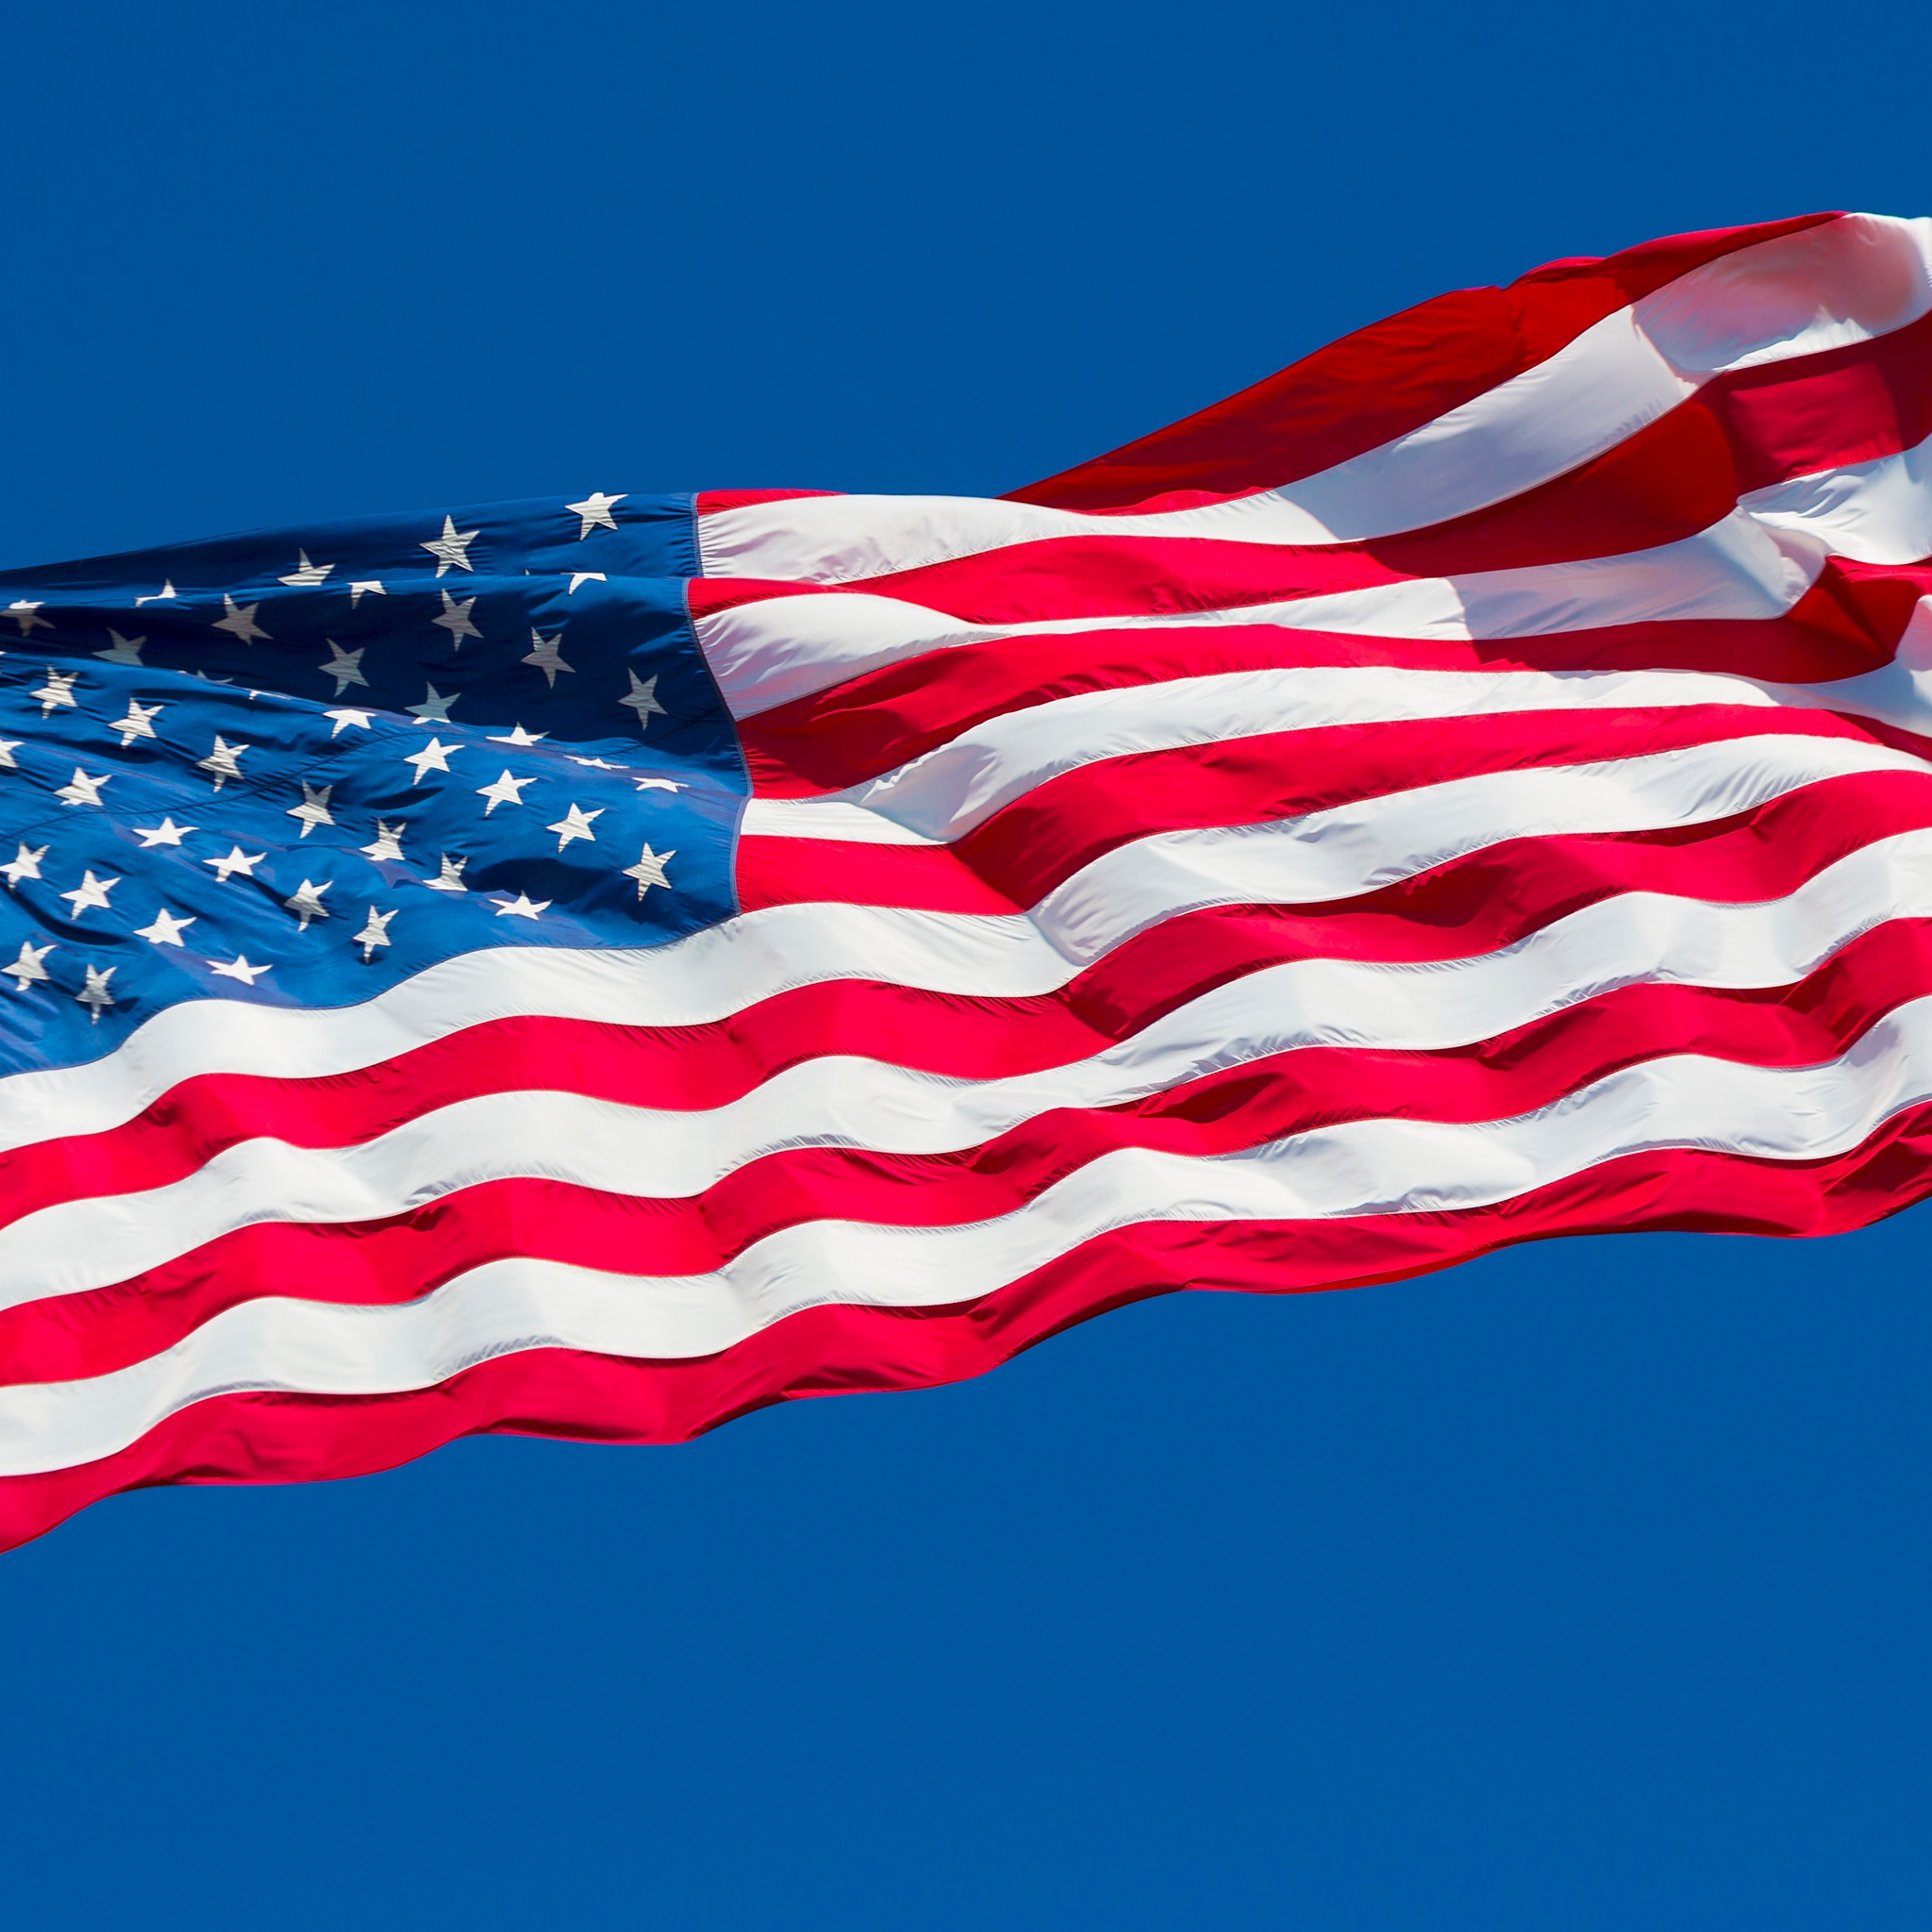 900 American Flag Background Images Download HD Backgrounds on Unsplash